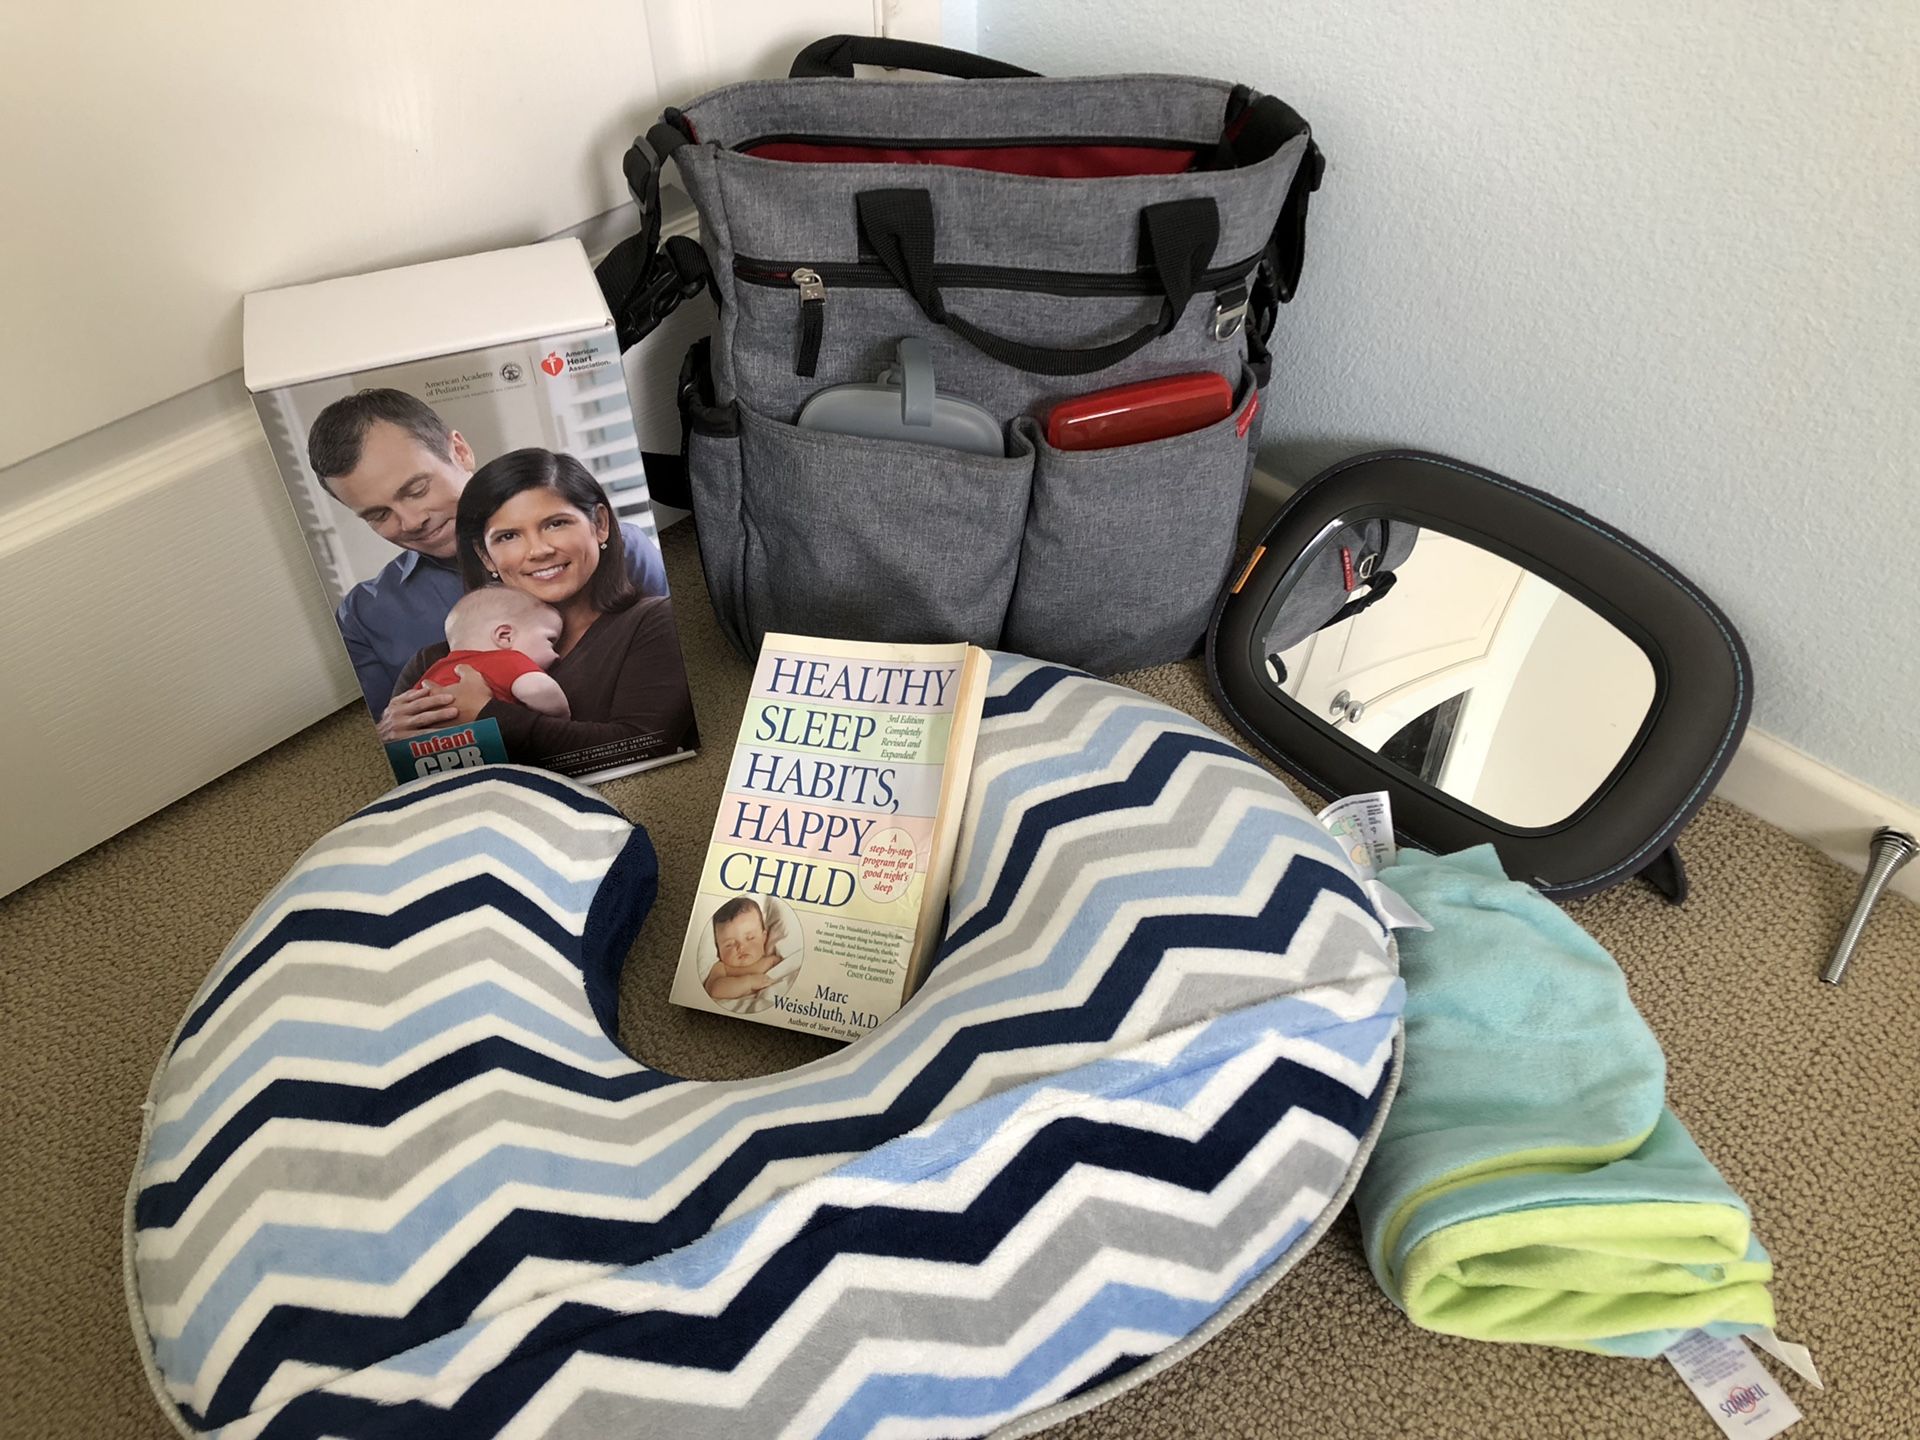 Boppy Pillow, Bath Stuff, Shopping Cart Cover, Helmet & More Baby Items!